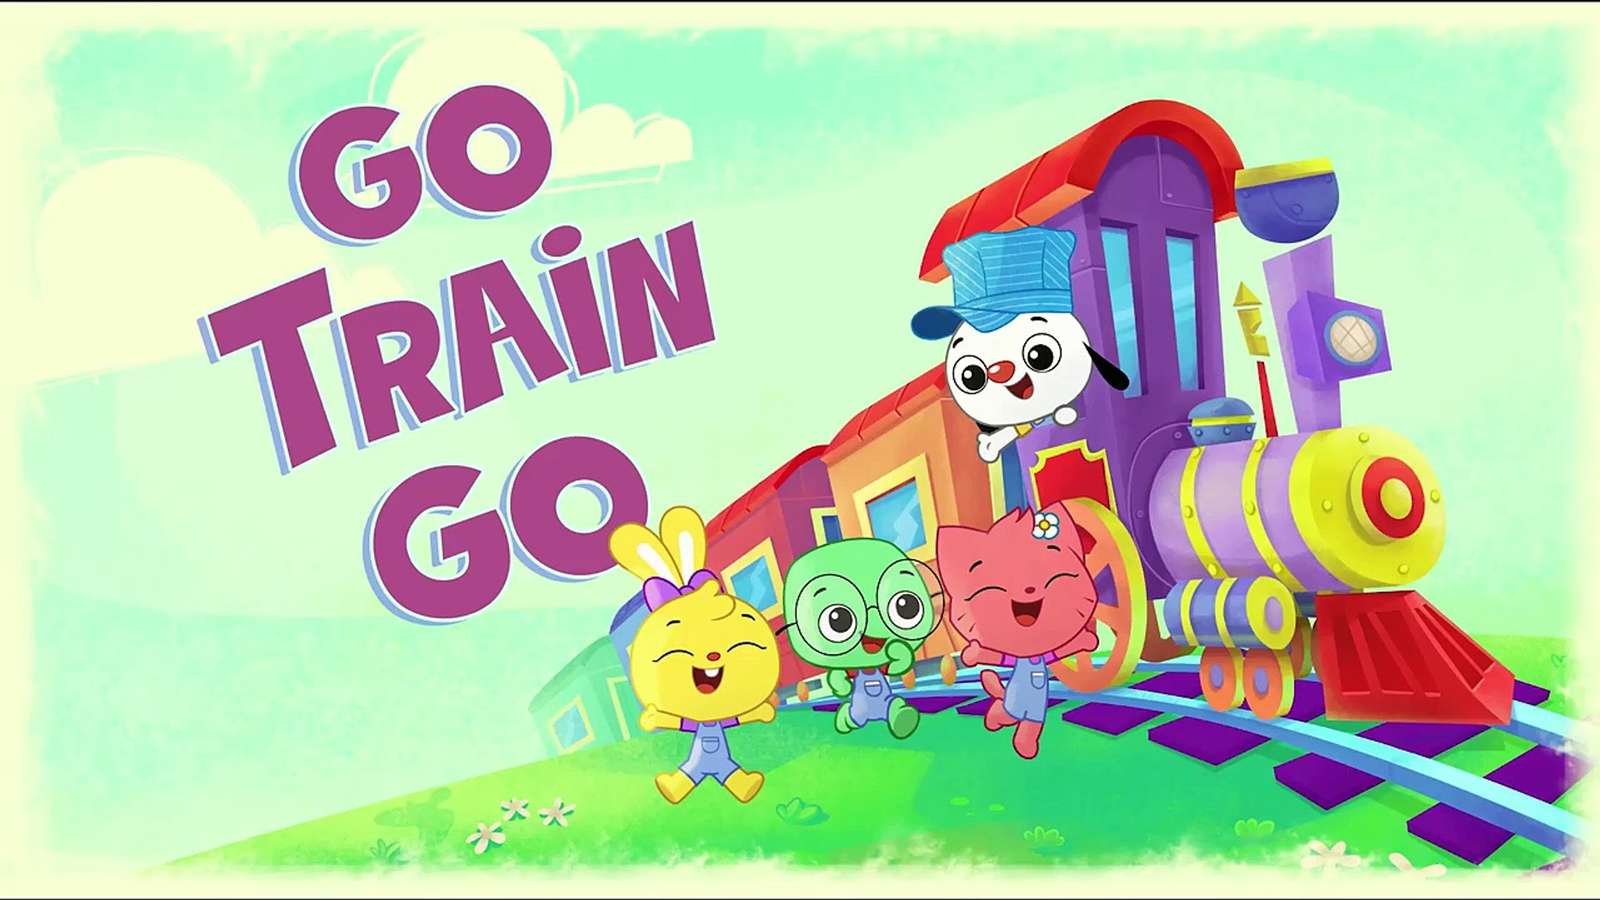 Go Train Go online puzzle